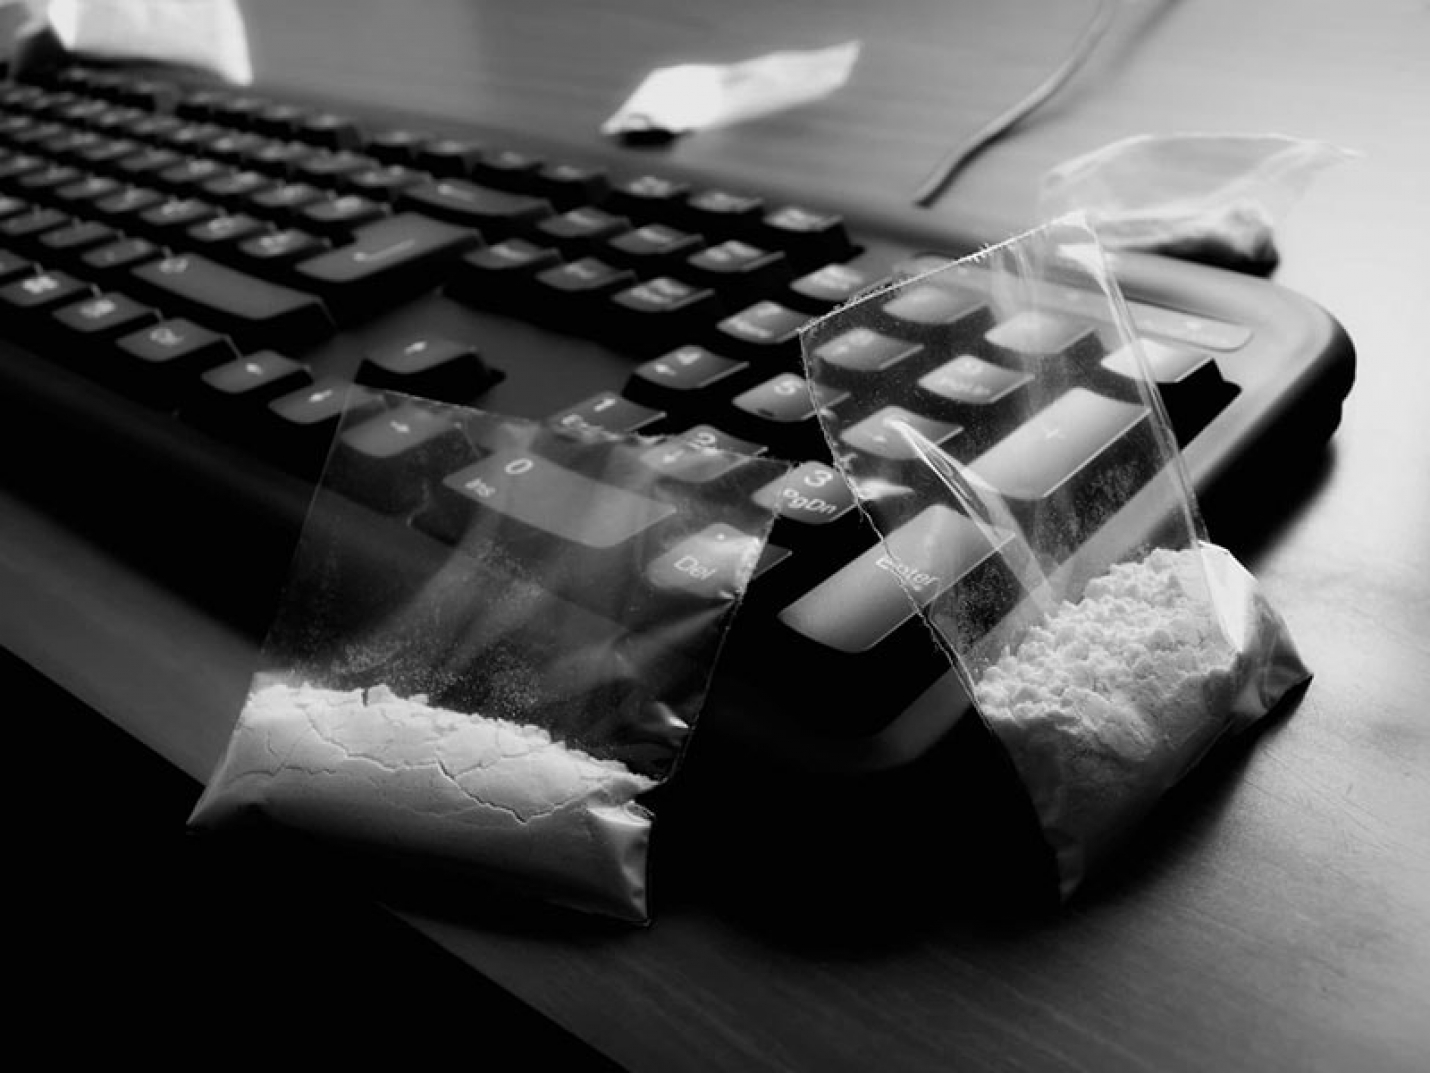 ФСБ пресекла масштабное производство наркотиков для продажи через интернет